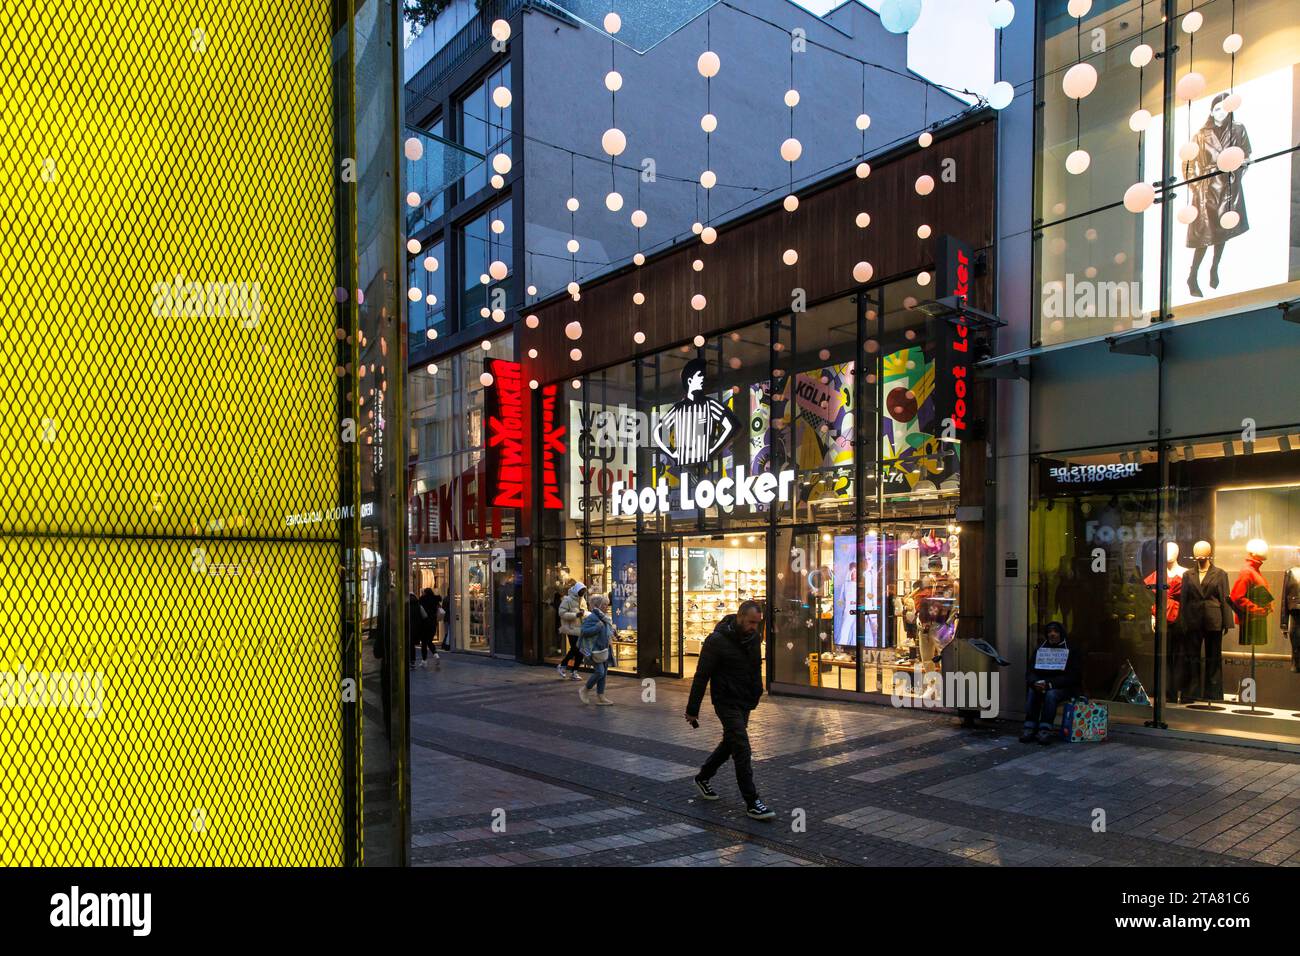 Magasin foot Locker dans la rue commerçante Hohe Strasse, magasin de baskets et de vêtements de sport, Cologne, Allemagne. Magasin Snipes in der Fussgaengerzone Hohe Str Banque D'Images